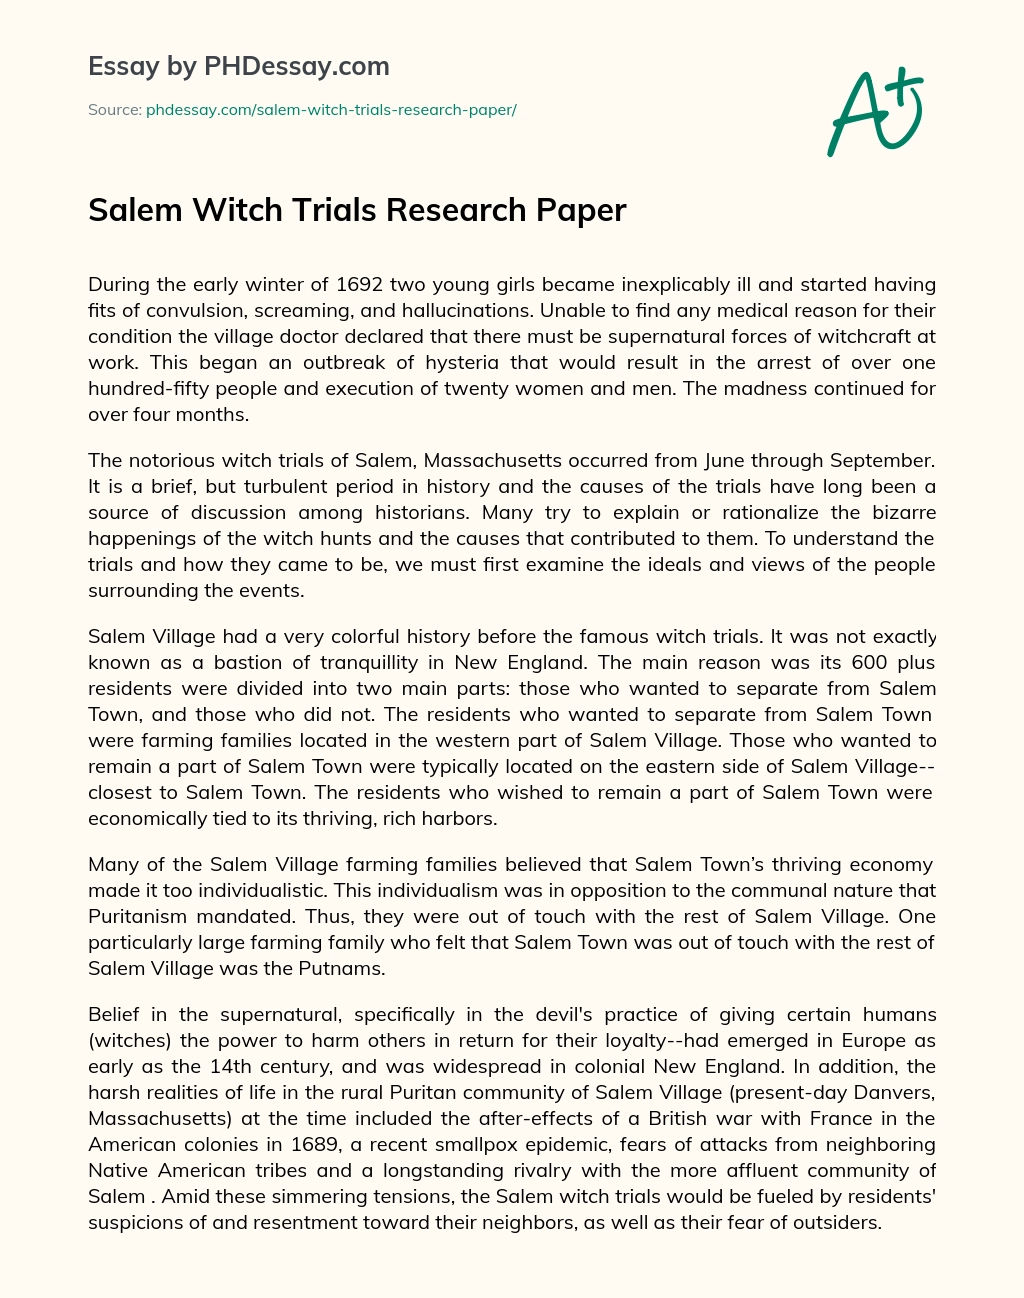 Salem Witch Trials Research Paper essay